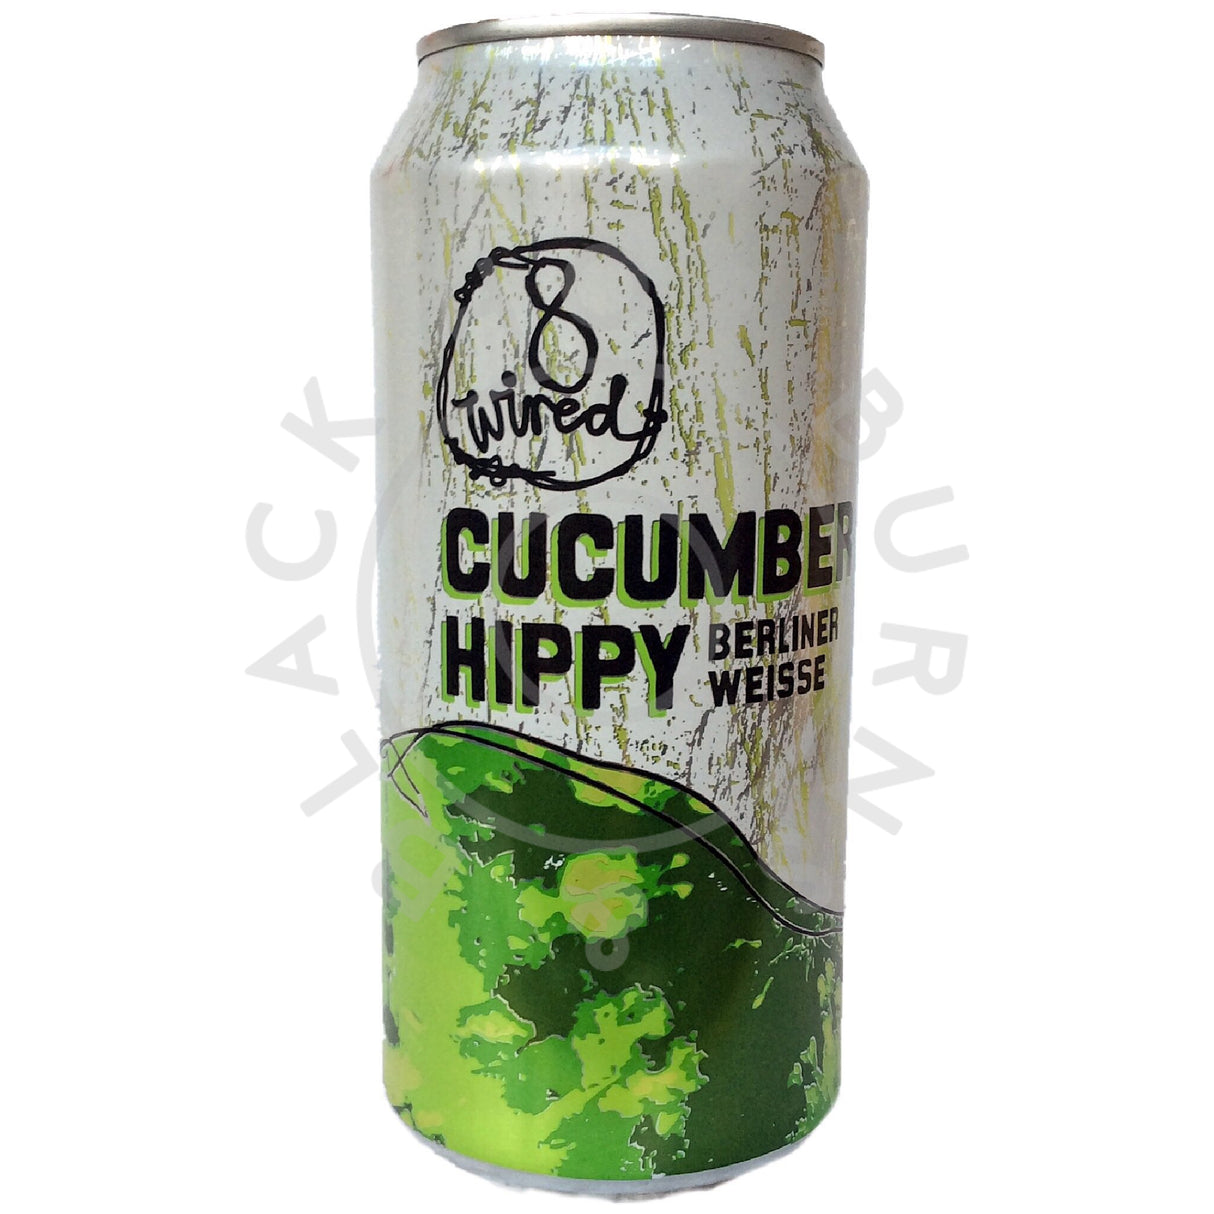 8 Wired Cucumber Hippy Berliner Weisse 4% (440ml can)-Hop Burns & Black